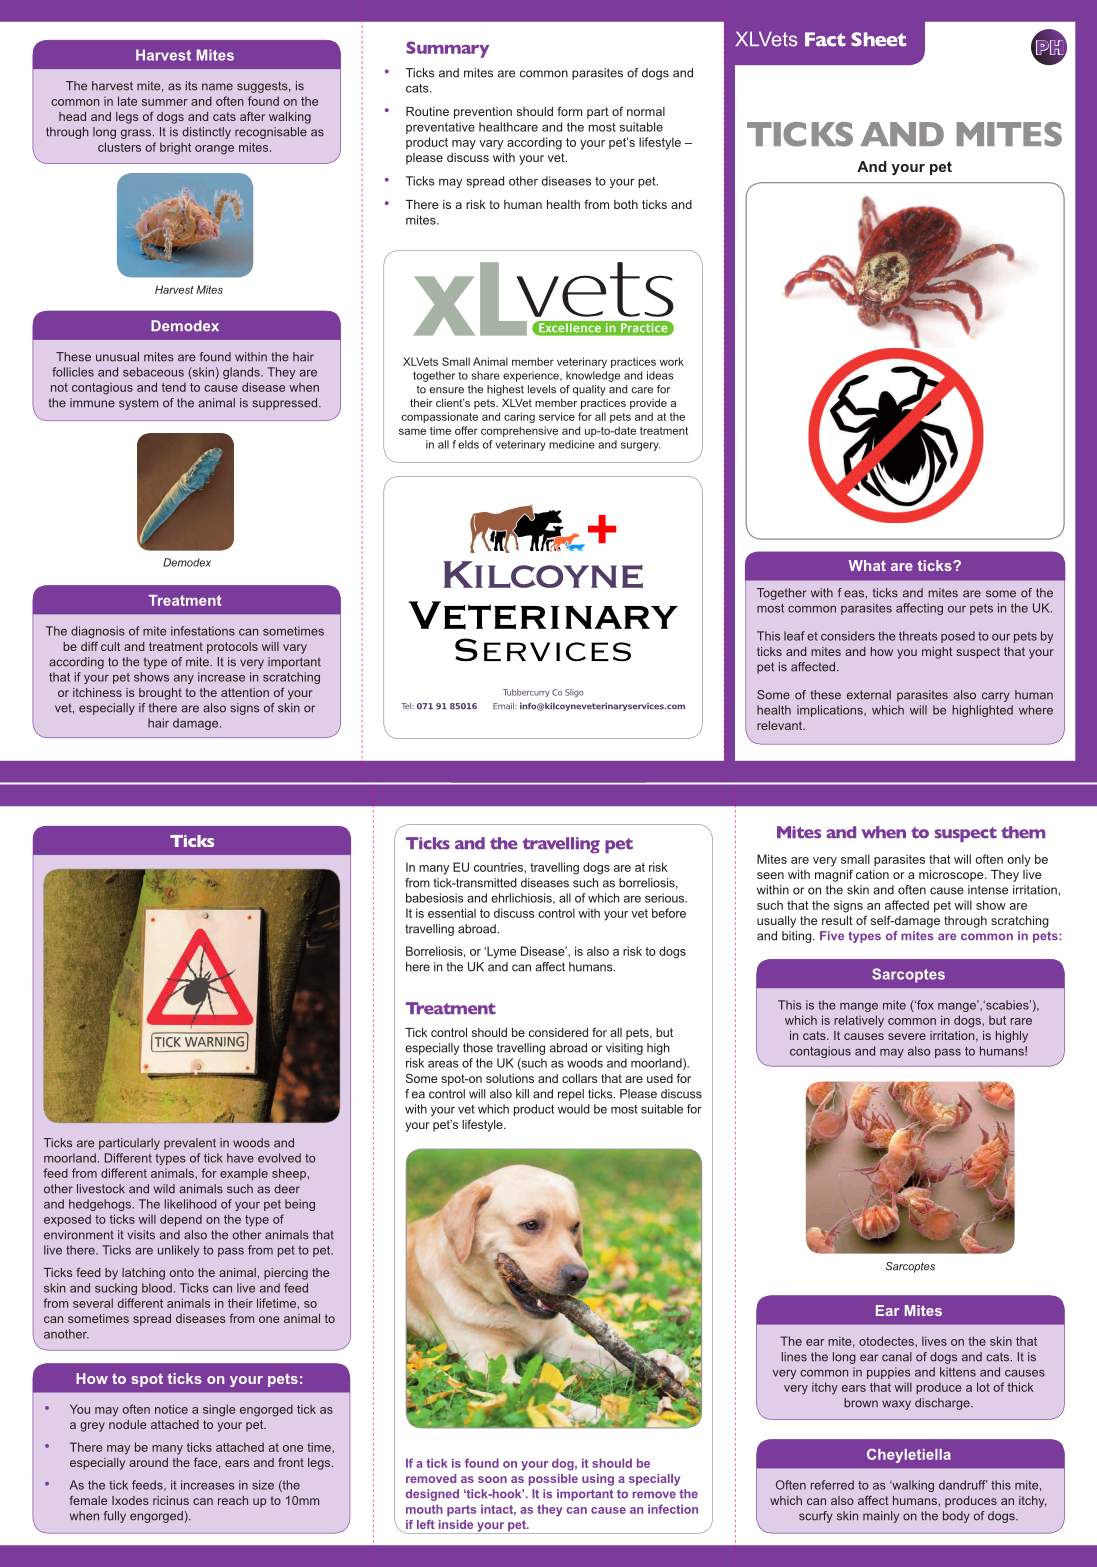 kilcoyne_veterinary_services_xlvets_factsheet_ticks_mites